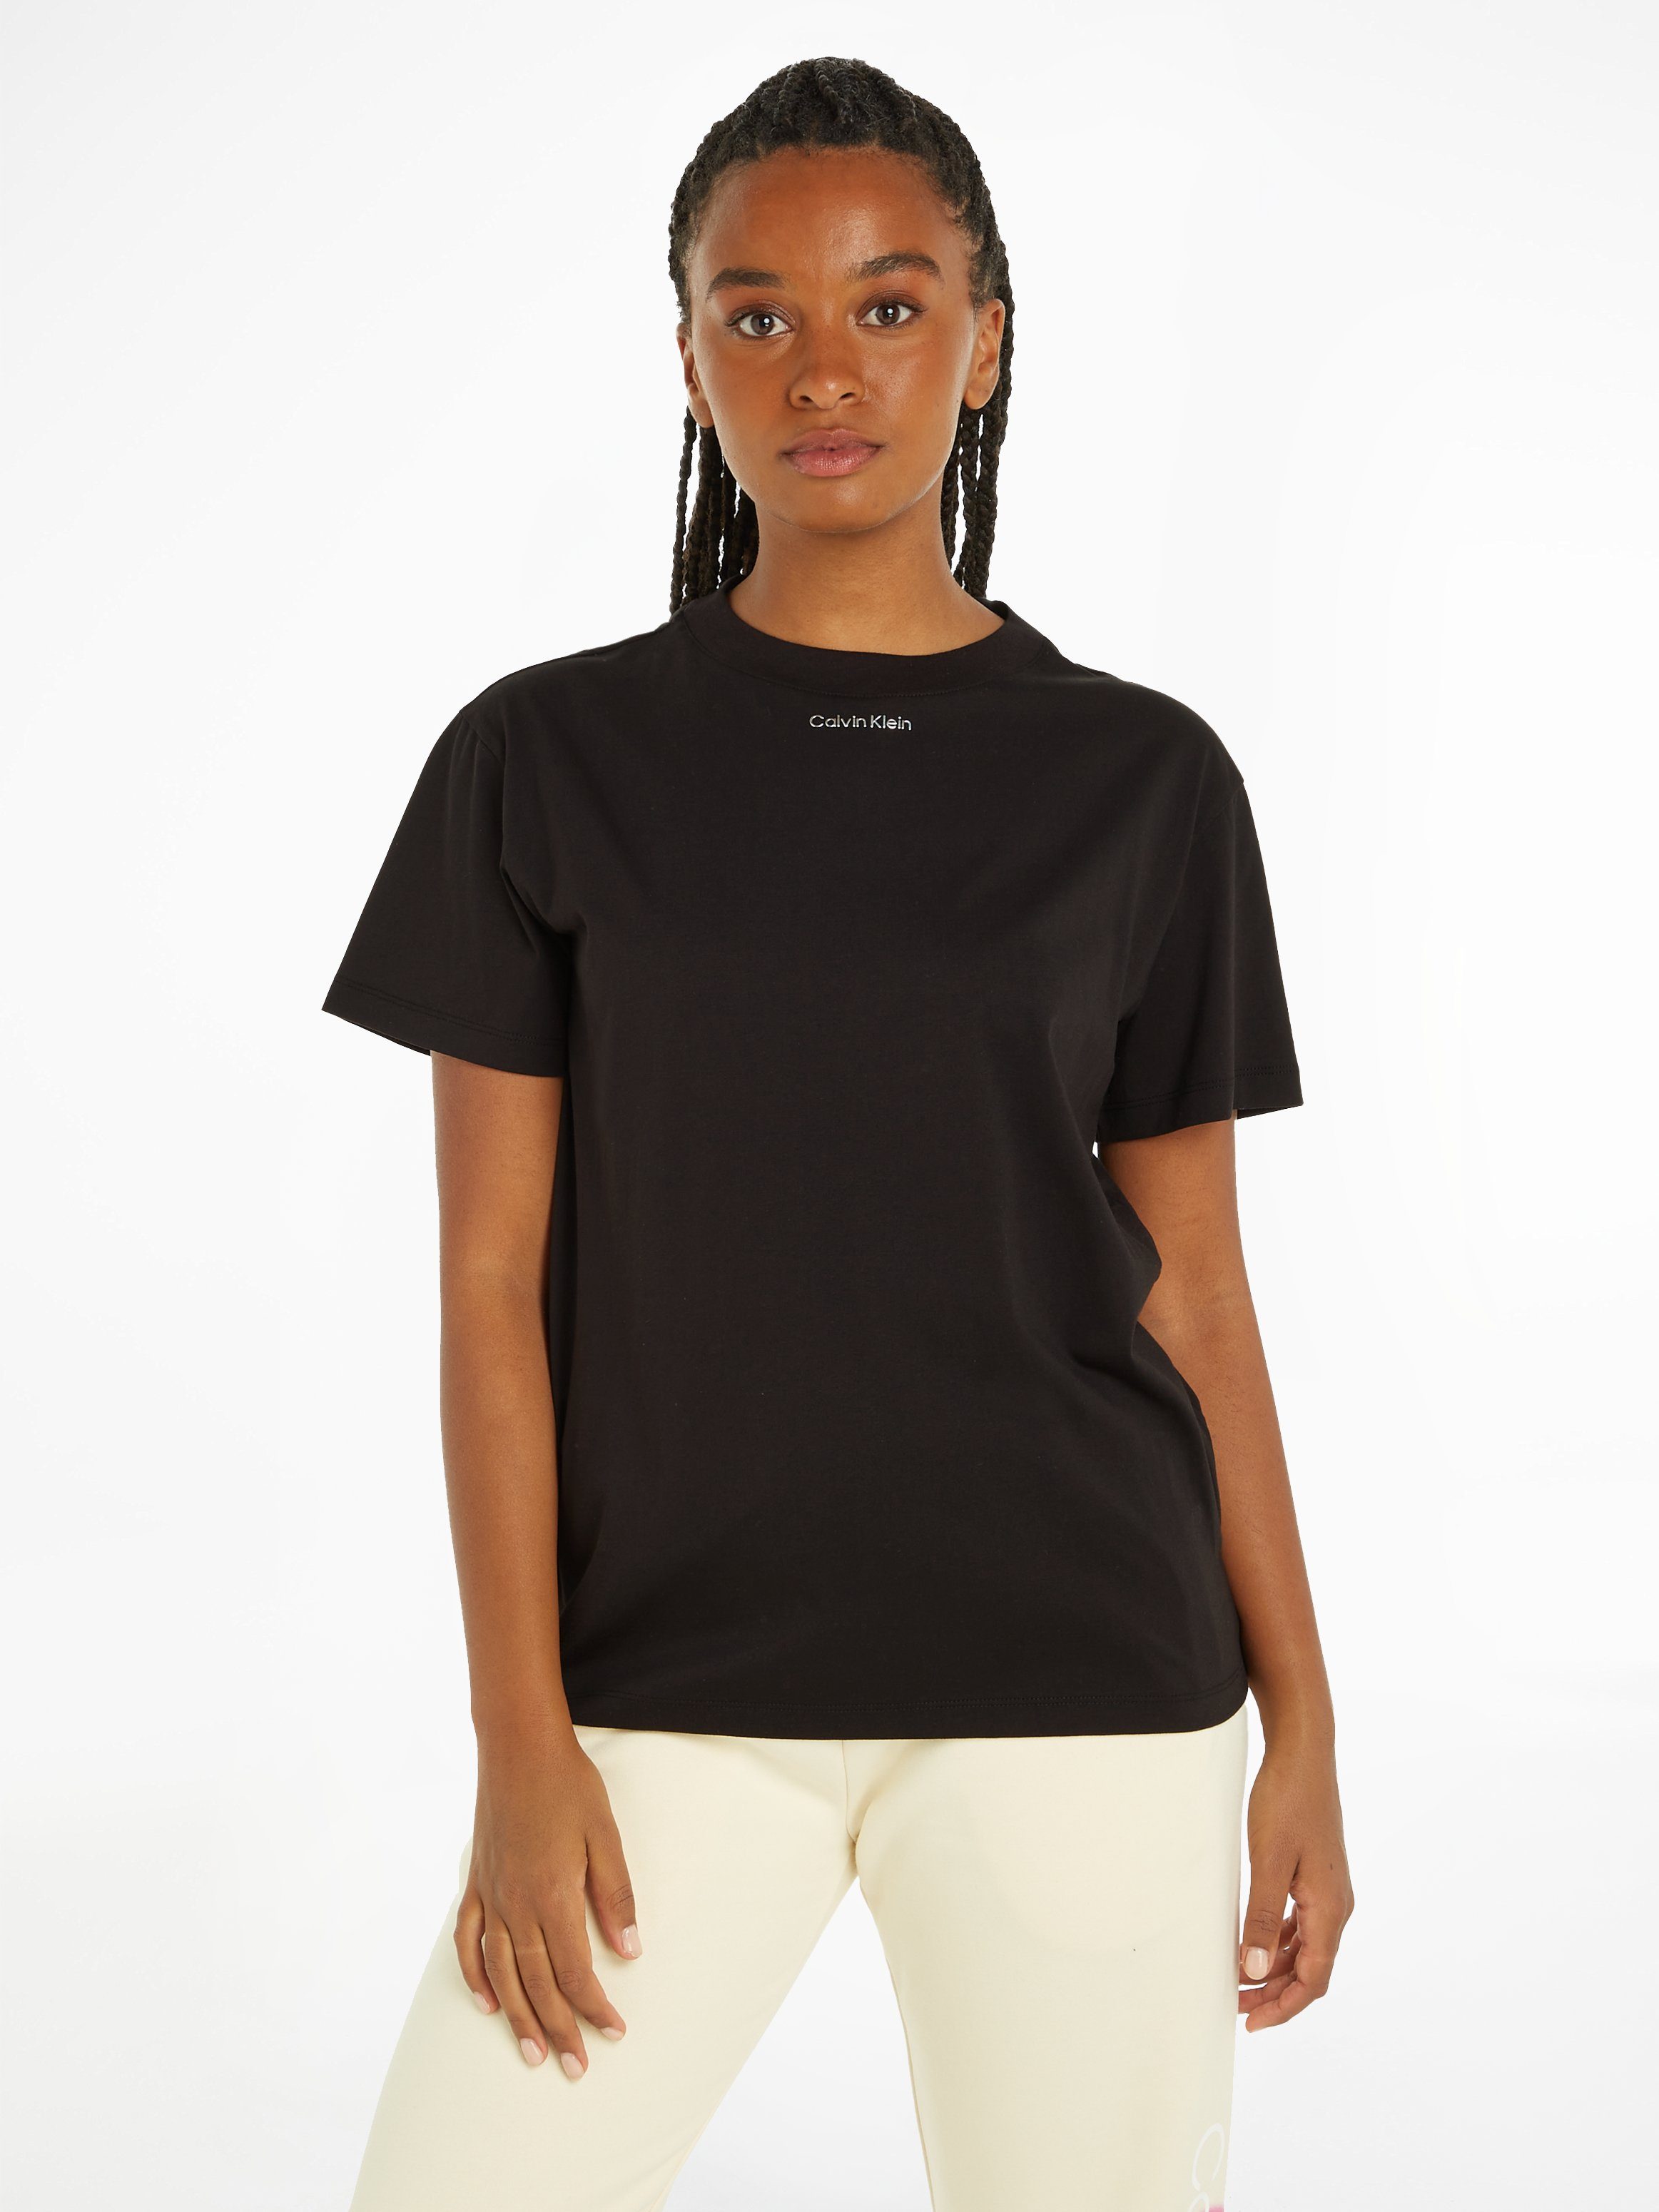 Calvin Klein METALLIC T MICRO LOGO T-Shirt Black Ck SHIRT